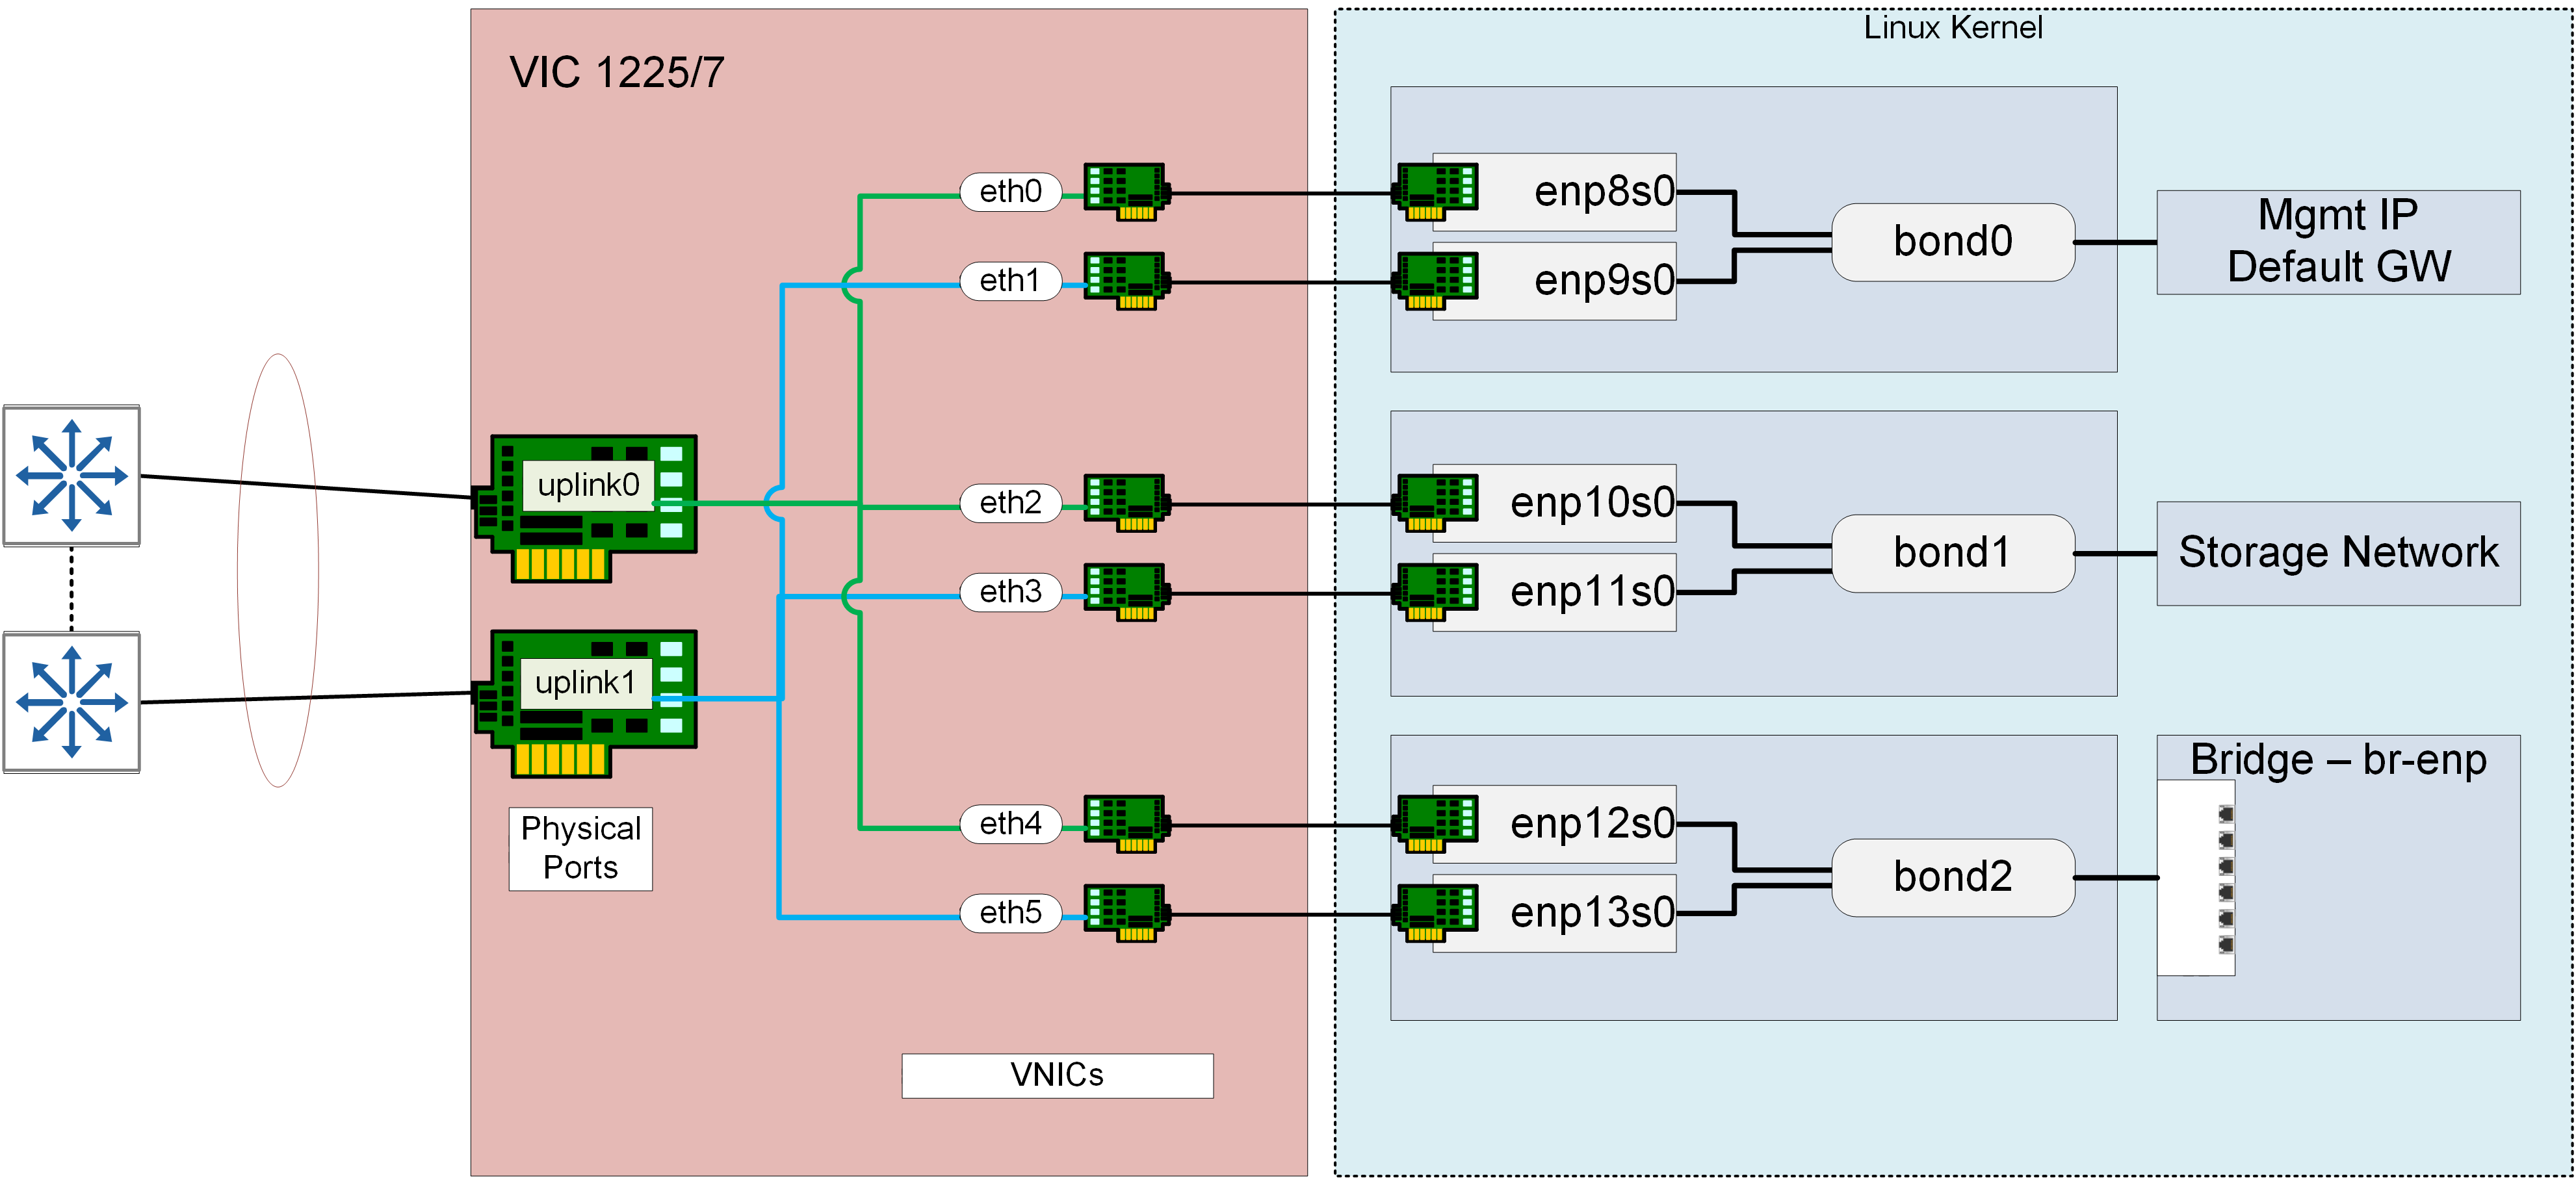 Cisco VIC - vnic configuration.png